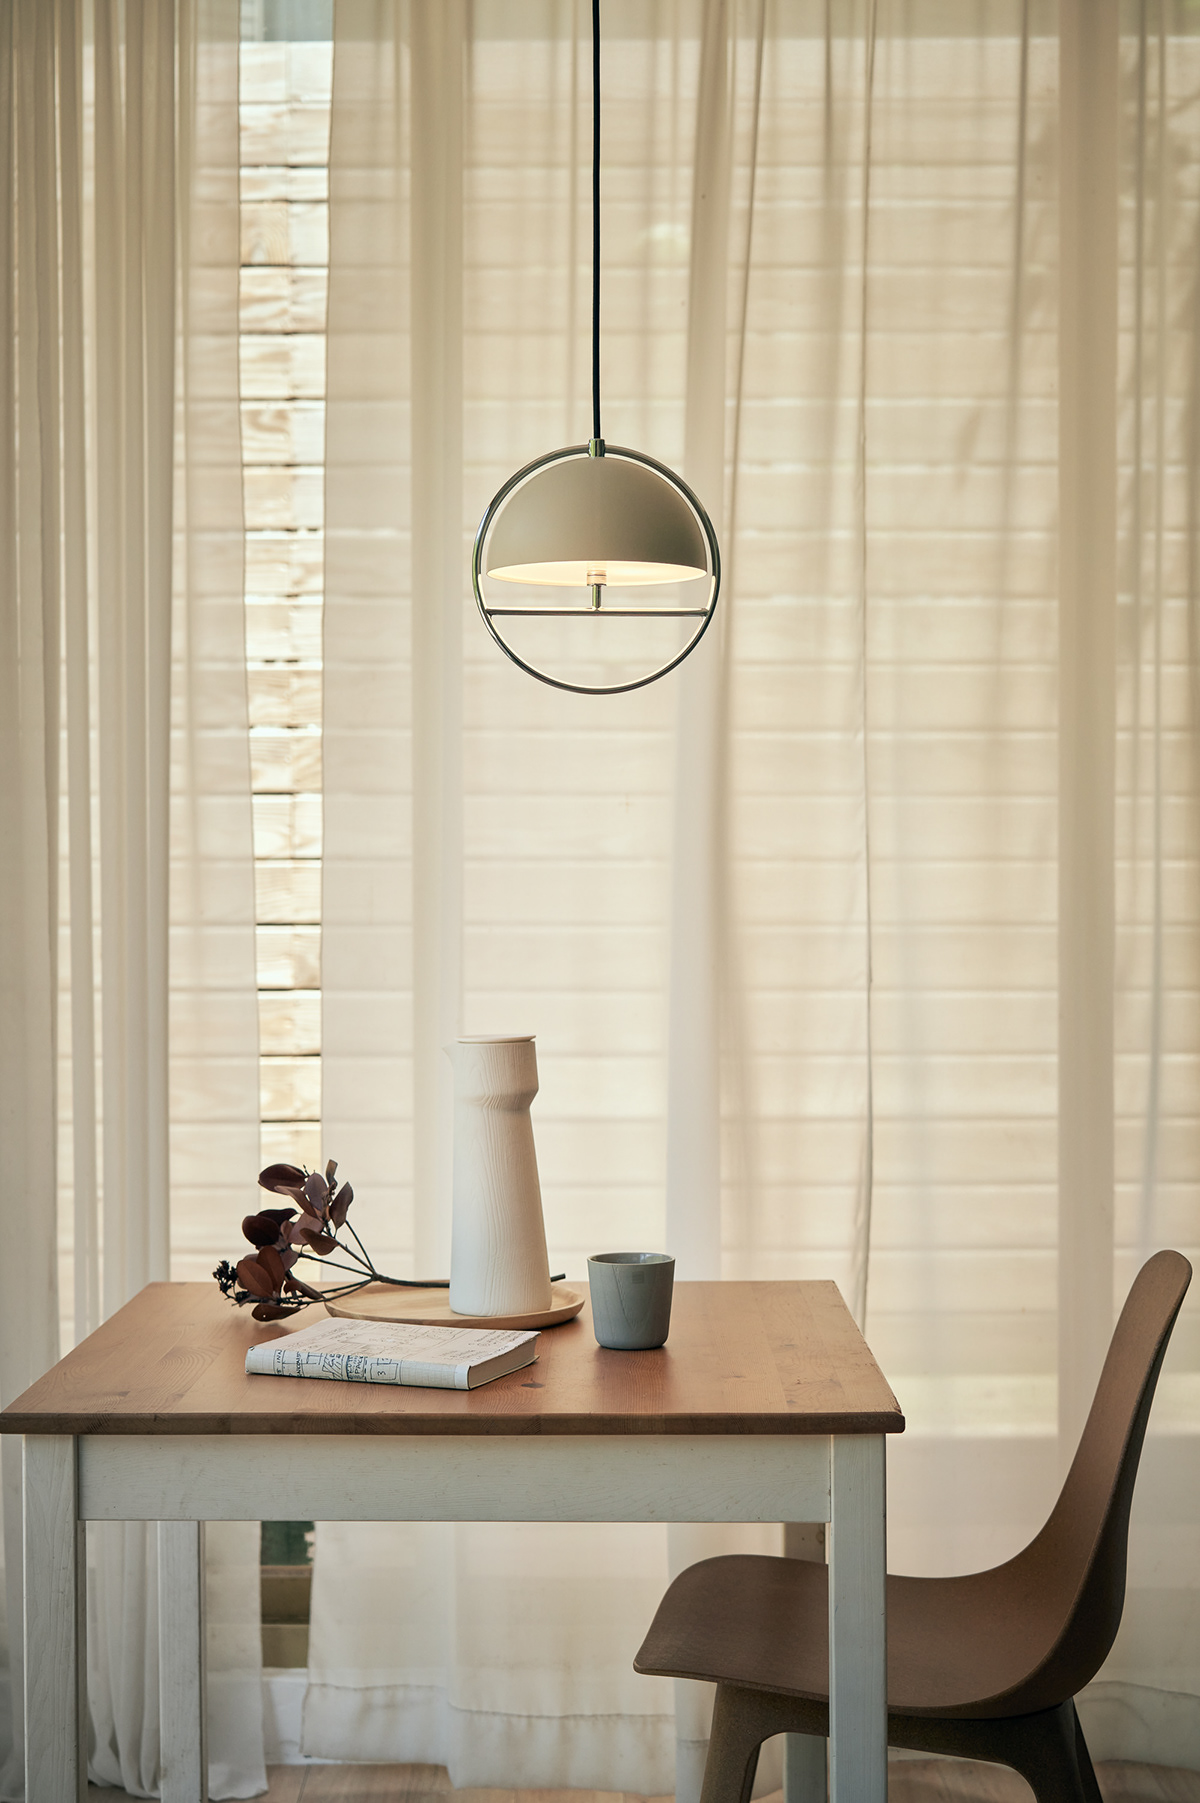 furniture lighting product design  Lamp